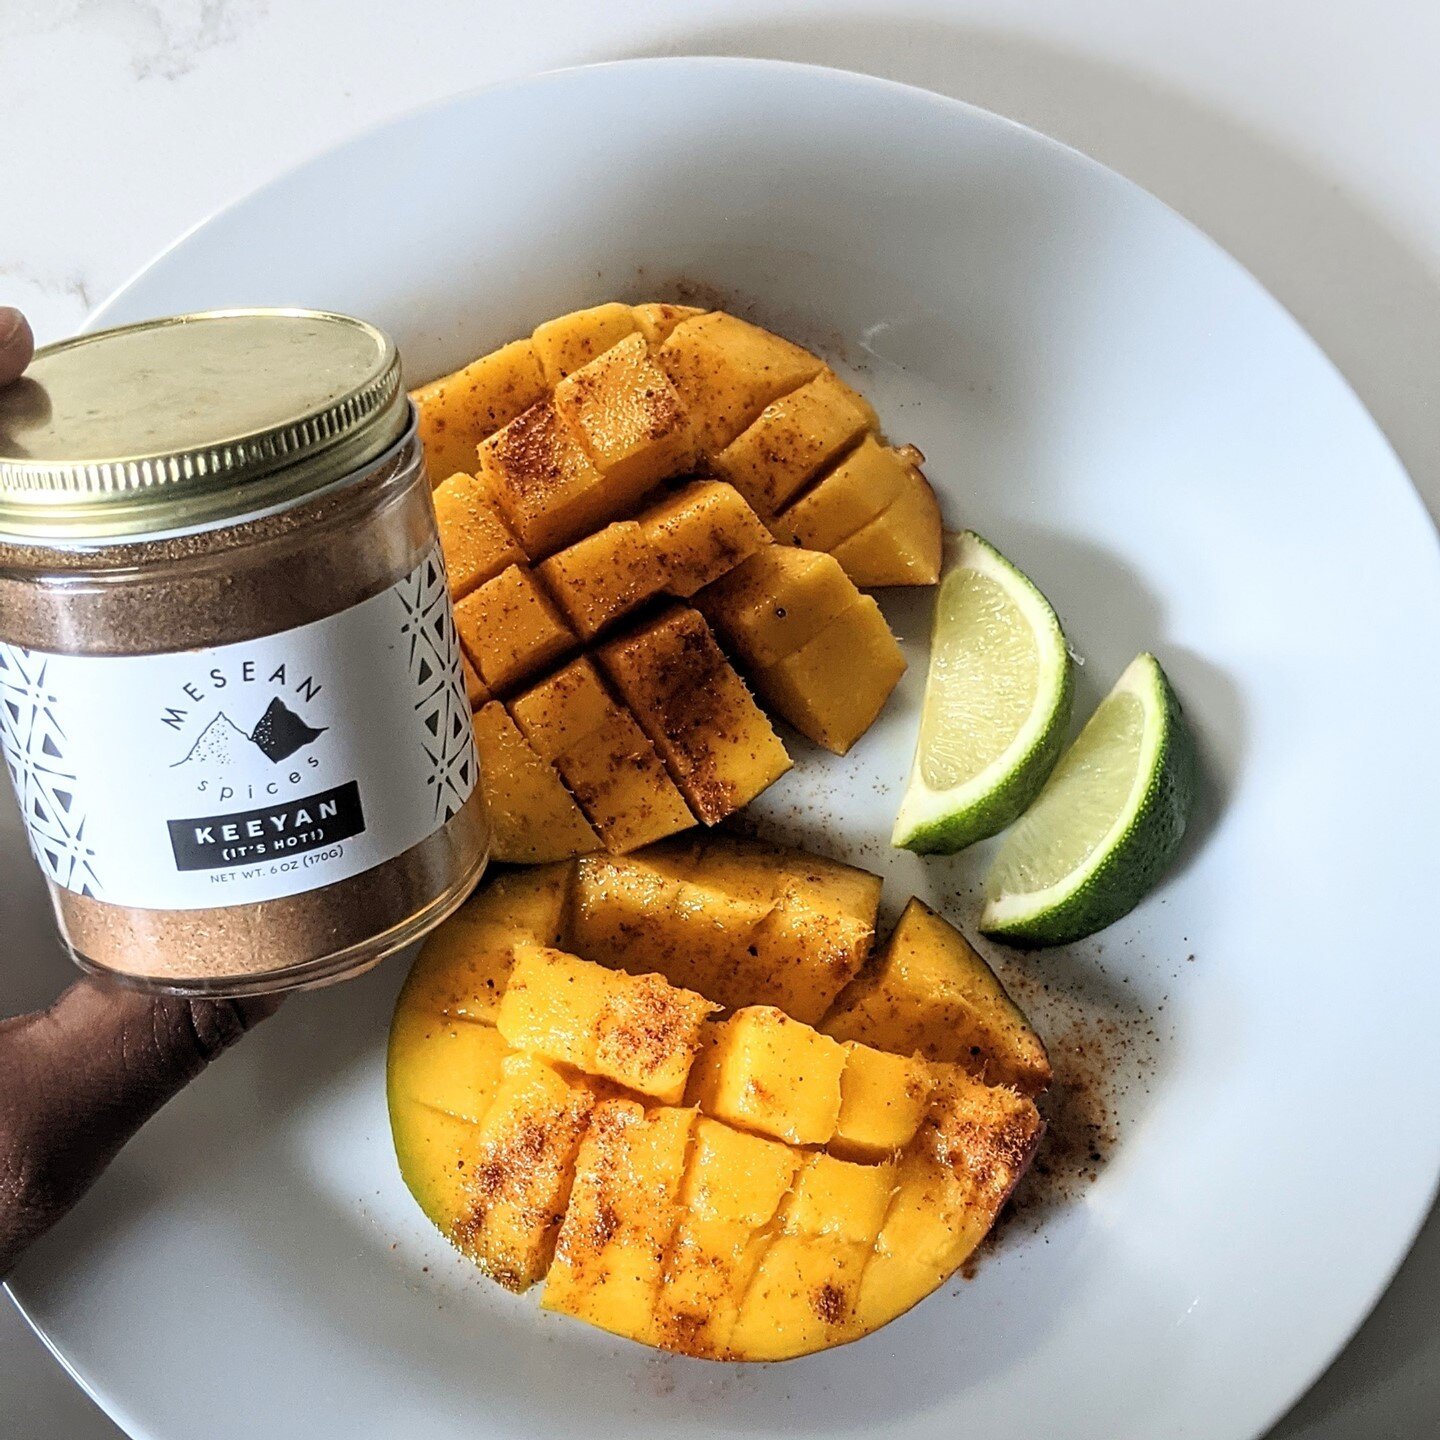 A tasty midday snack! Ripe mango, lime juice, and Keeyan 🌶️

#meseanspices #keeyan #eatgoodalways #spicysaltysweet #middaysnack #snacktime #yummy #spiceblends #seasoning #africandiaspora #africanfood #fusionflavors #shopblack #gourmet #homekitchen #